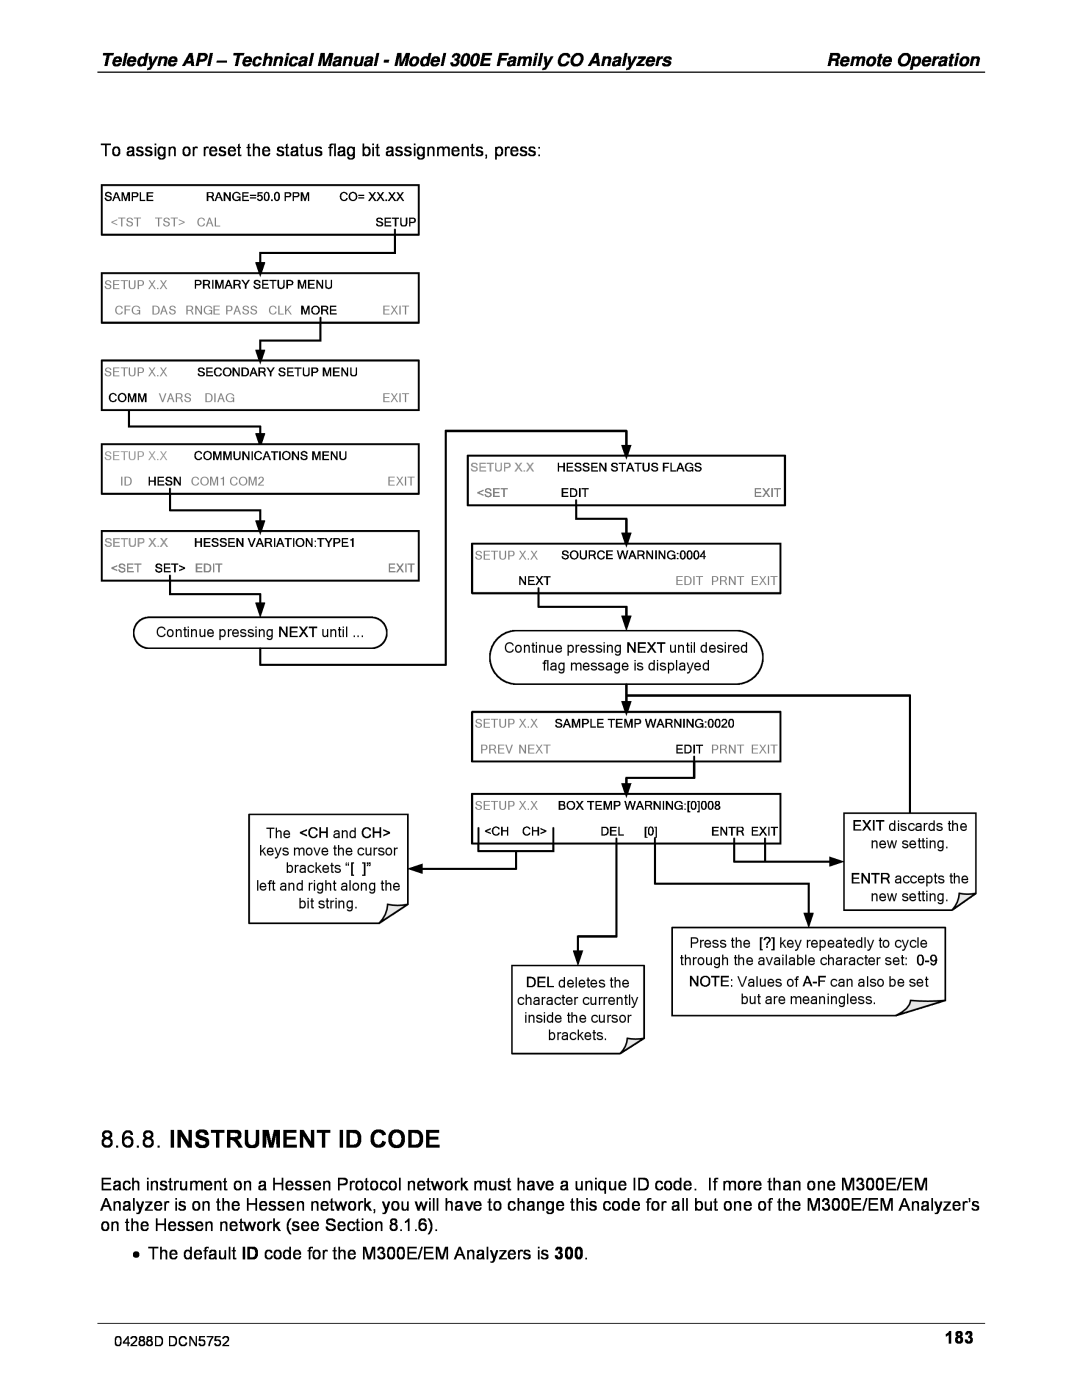 Teledyne M300EM operation manual Instrument Id Code 